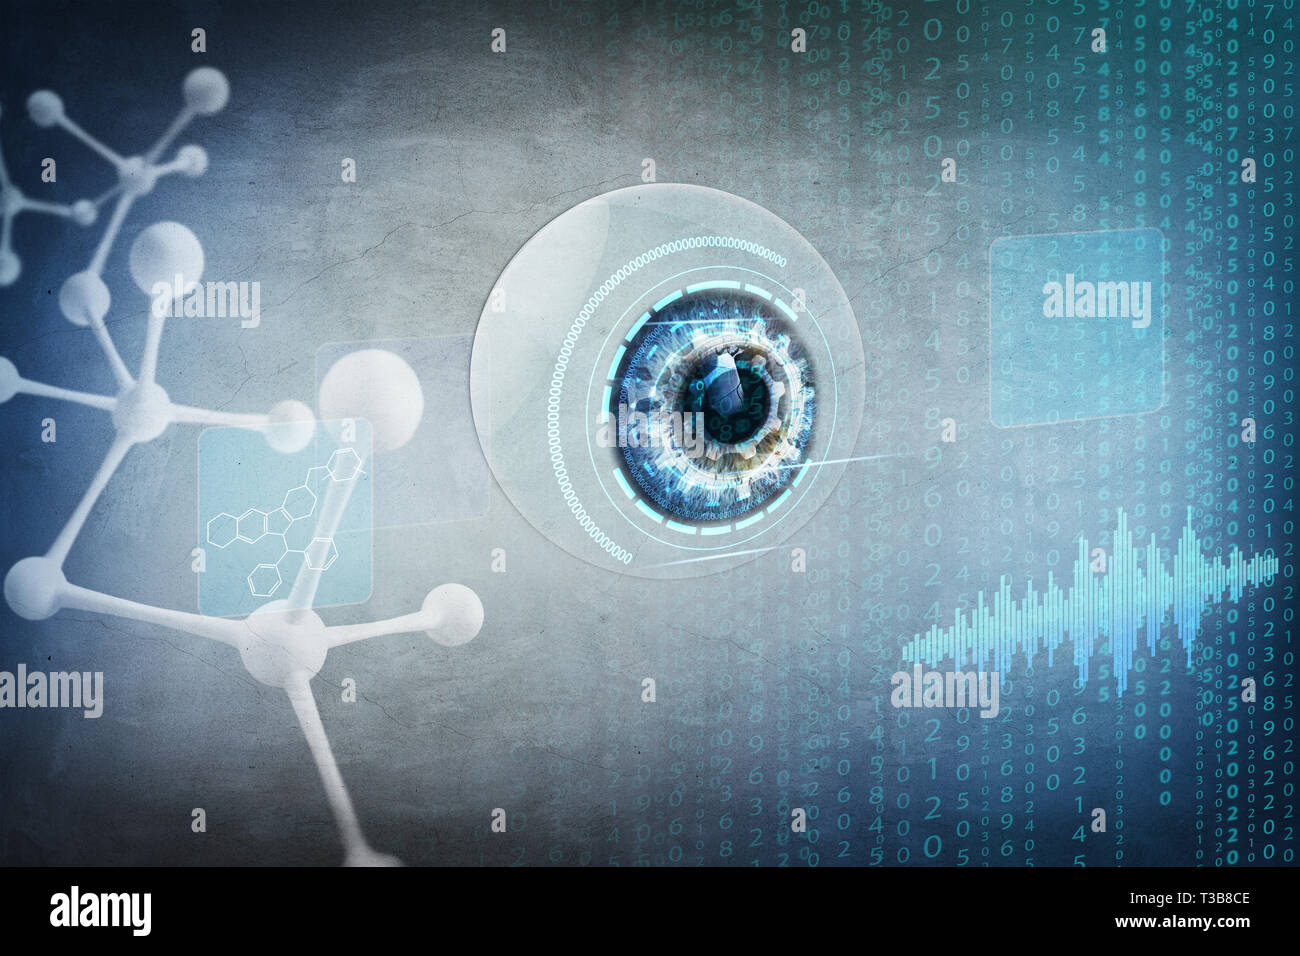 Human eyeball in process of biometrics scanning. Stock Photo